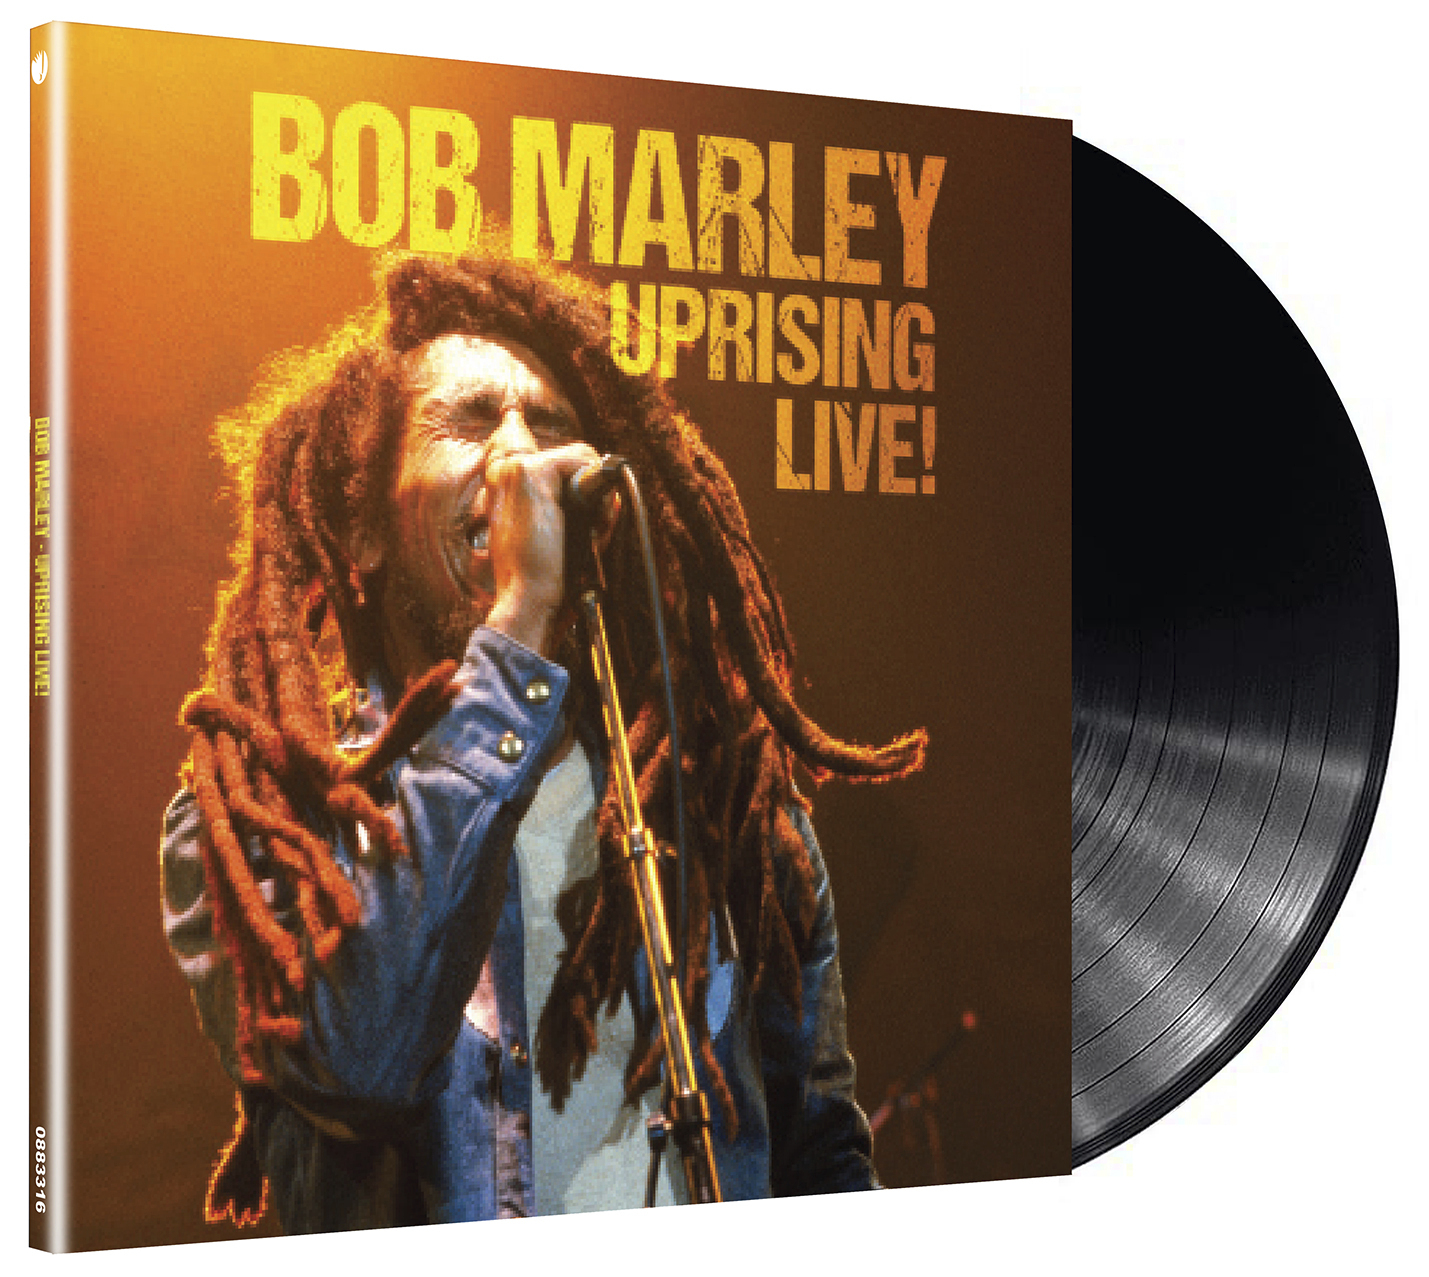 CD Shop - MARLEY BOB UPRISING LIVE!